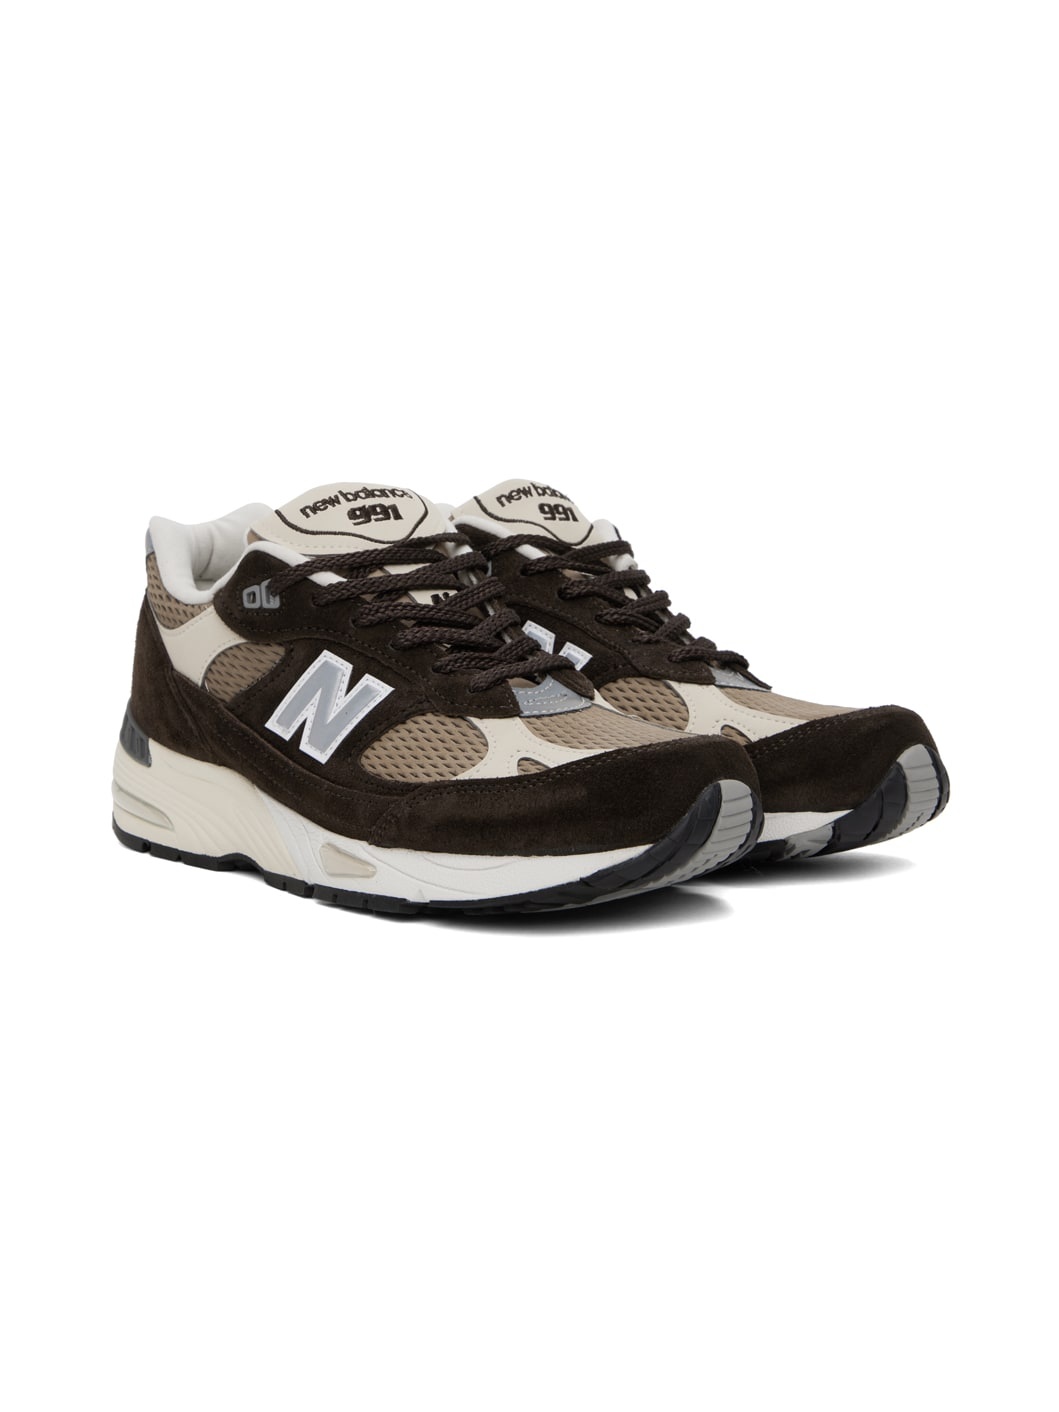 Brown & Beige Made In UK 991v1 Finale Sneakers - 4